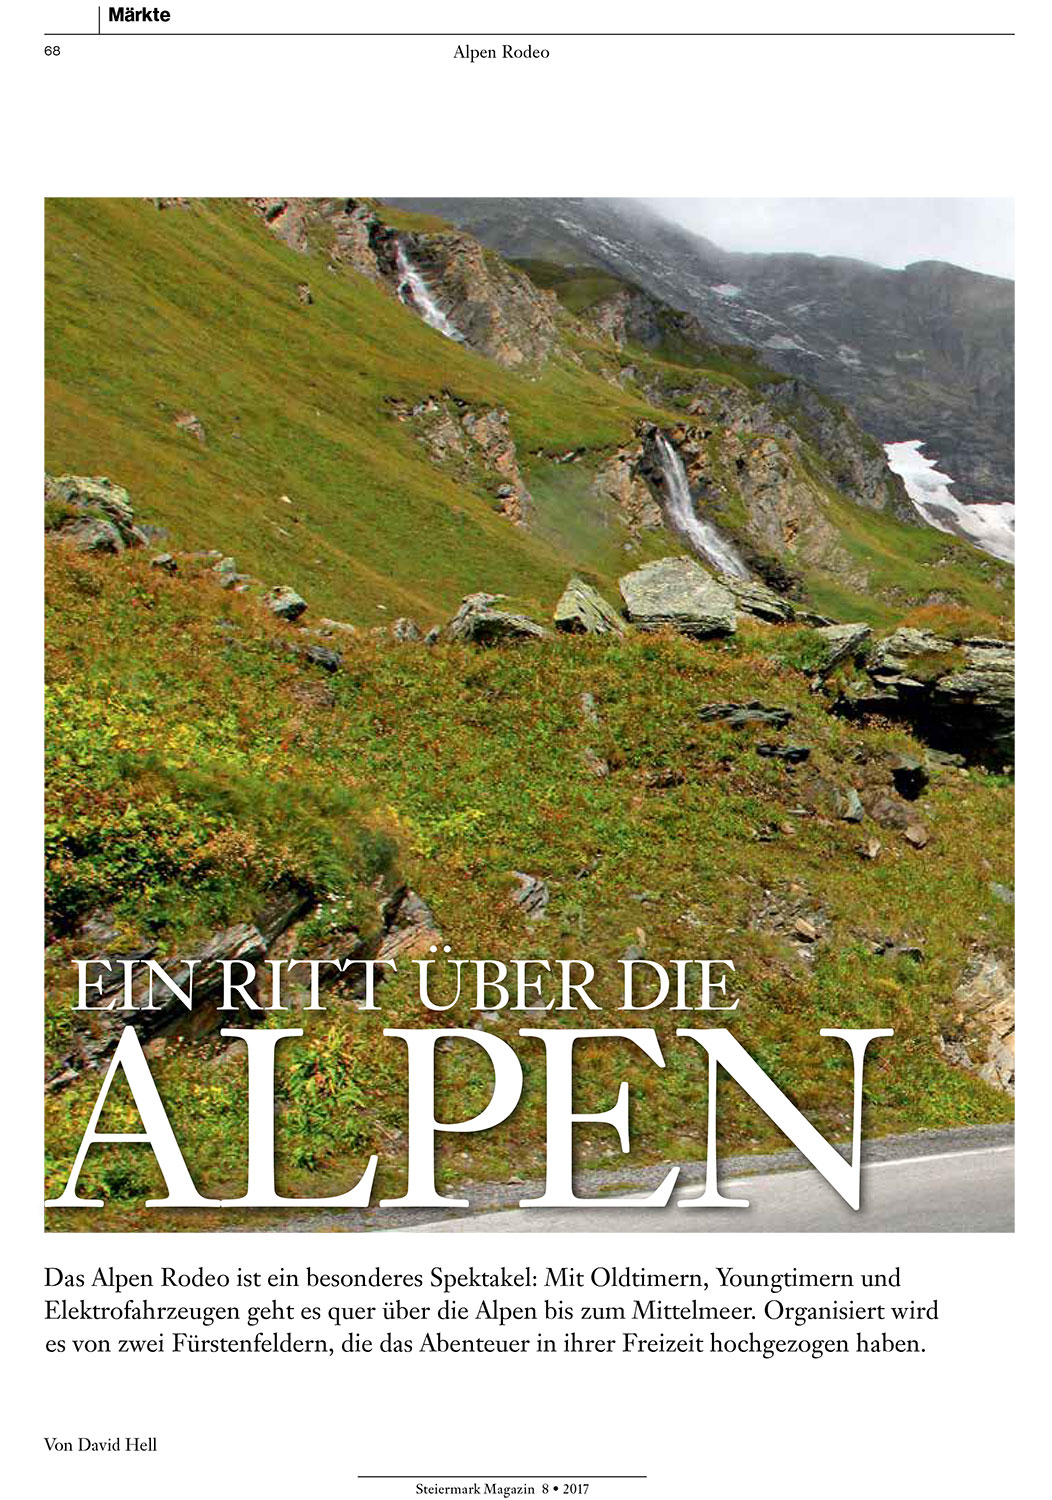 Alpen-Rodeo-Bericht-Steiermark-Magazin-Oktober-2017-1.jpg